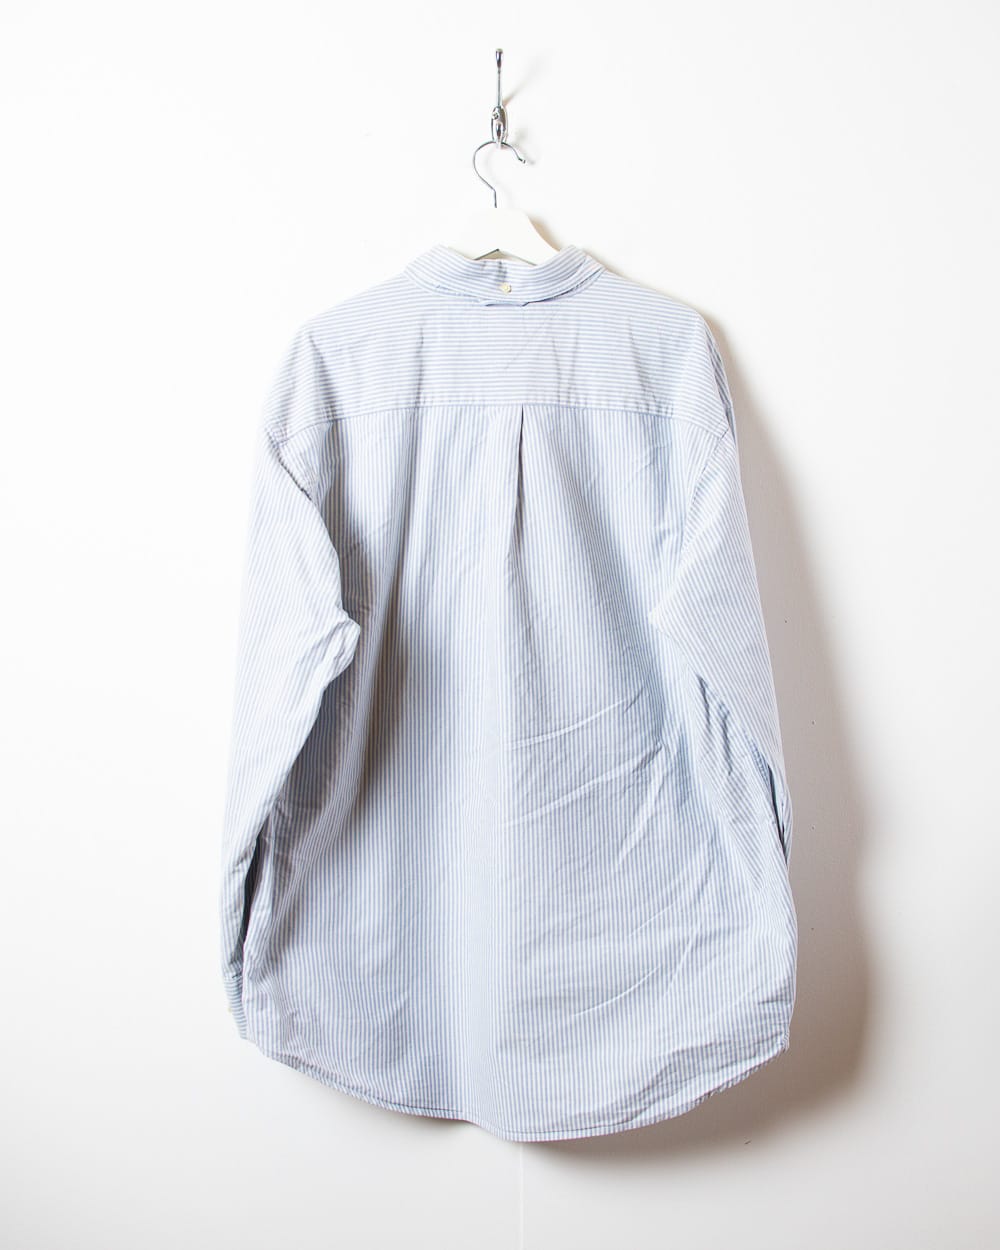 BabyBlue Tommy Hilfiger Striped Shirt - X-Large